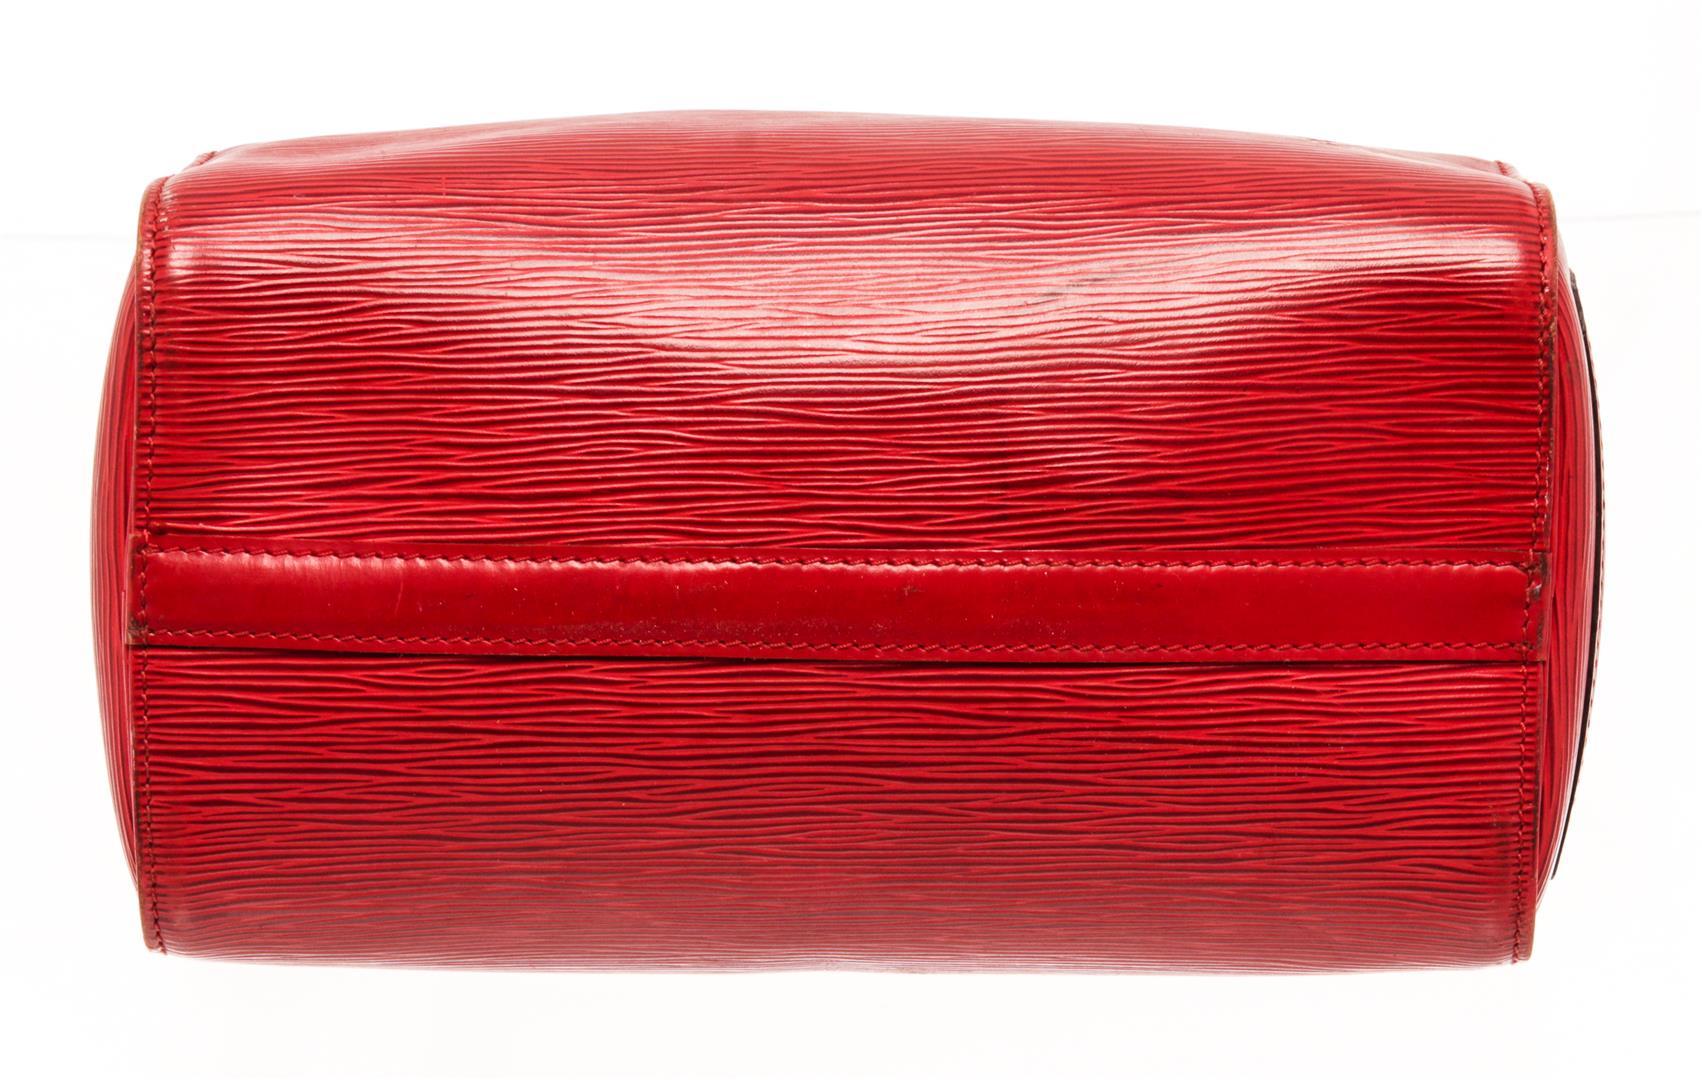 Louis Vuitton Red Epi Leather Speedy 25 Satchel Bag